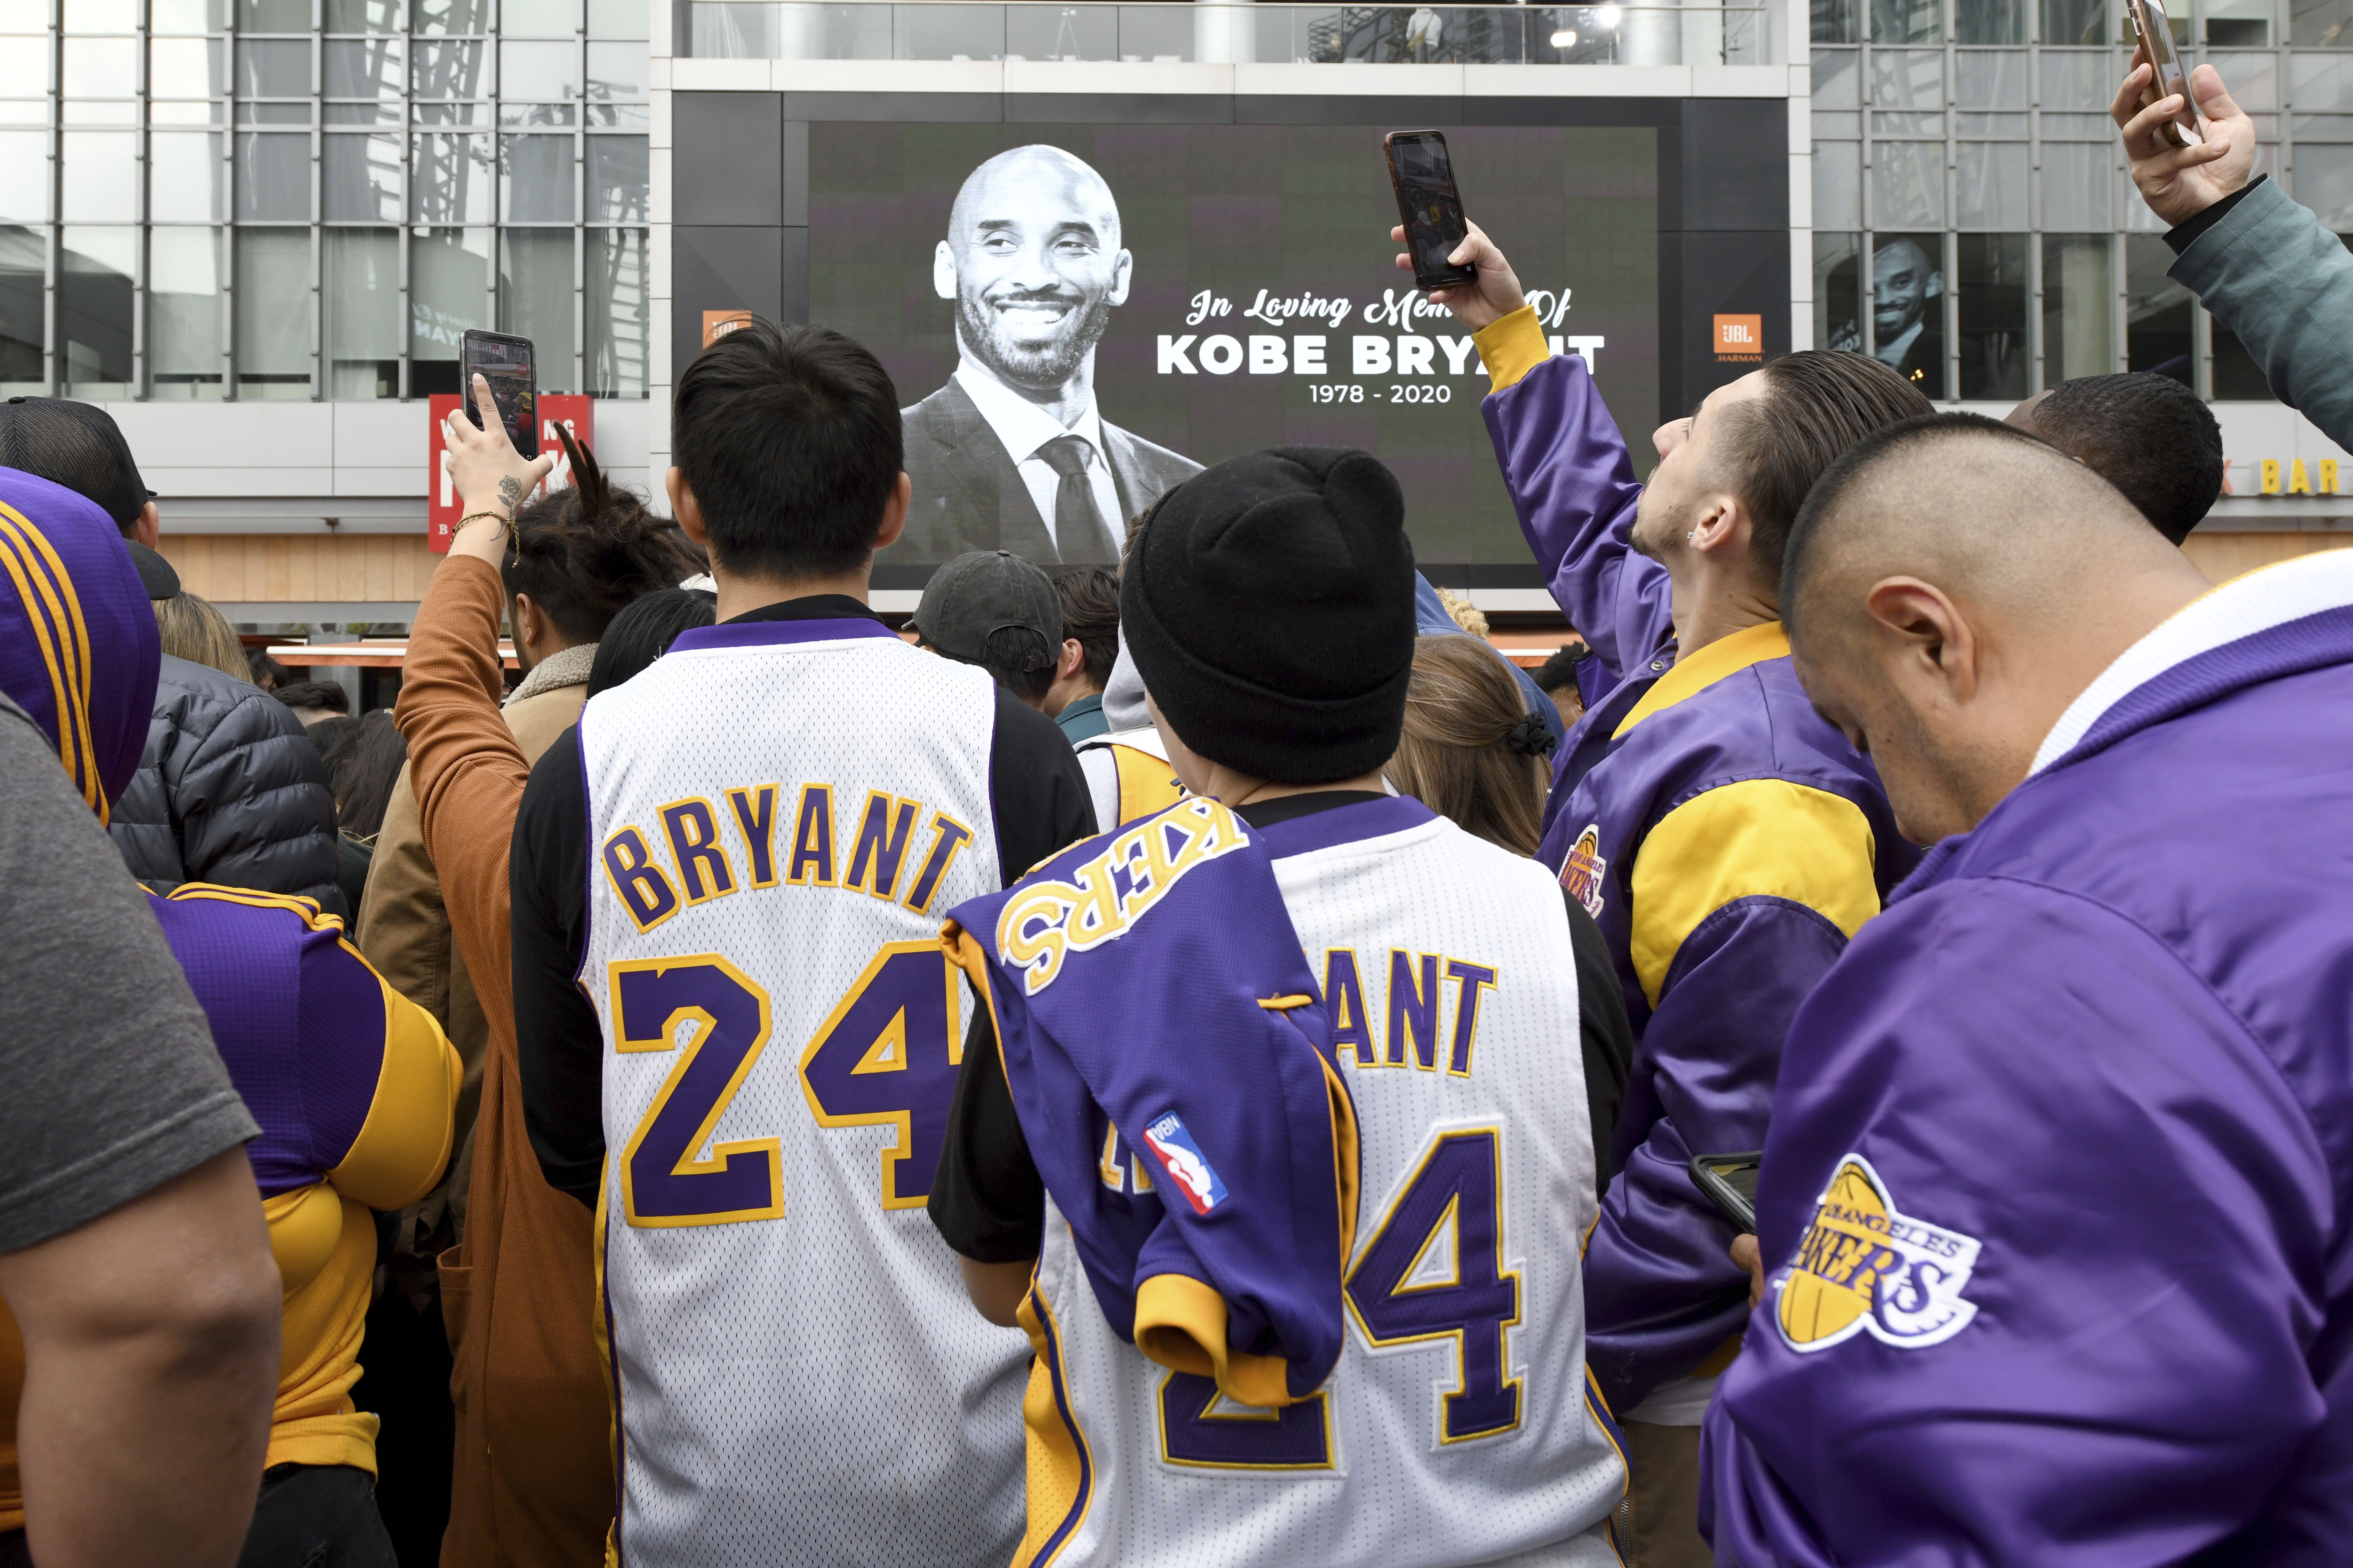 Team USA on X: Legend. Rest In Peace, Kobe Bryant.